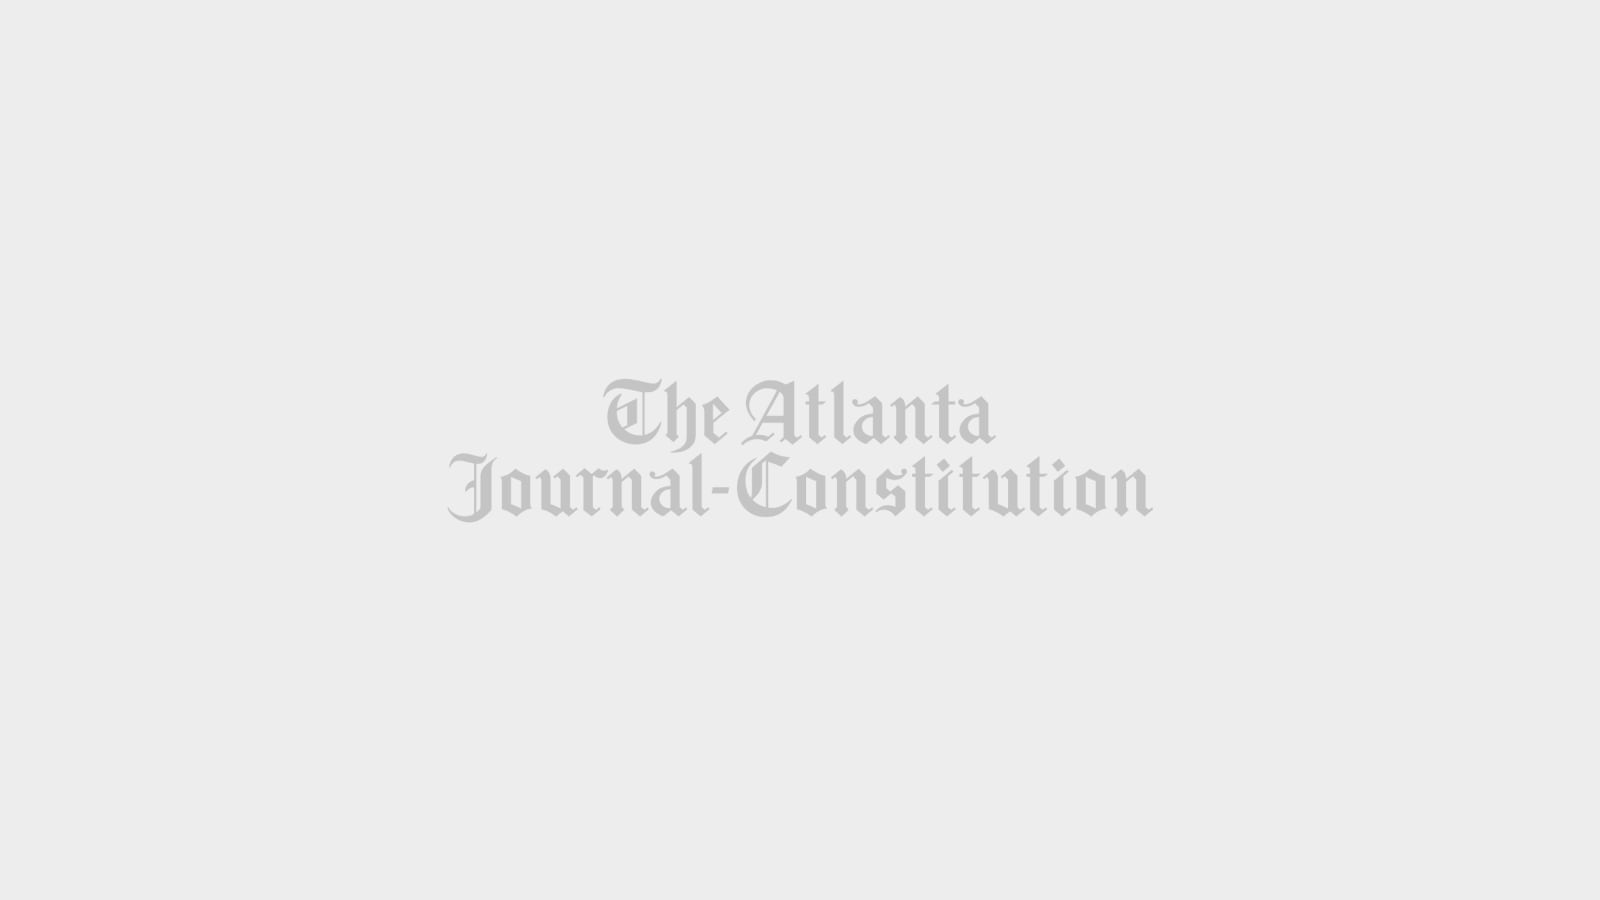 220111-Atlanta-President Joe Biden speaks about voting rights during at Clark Atlanta University on Tuesday, Jan. 11, 2022.  Ben Gray for the Atlanta Journal-Constitution